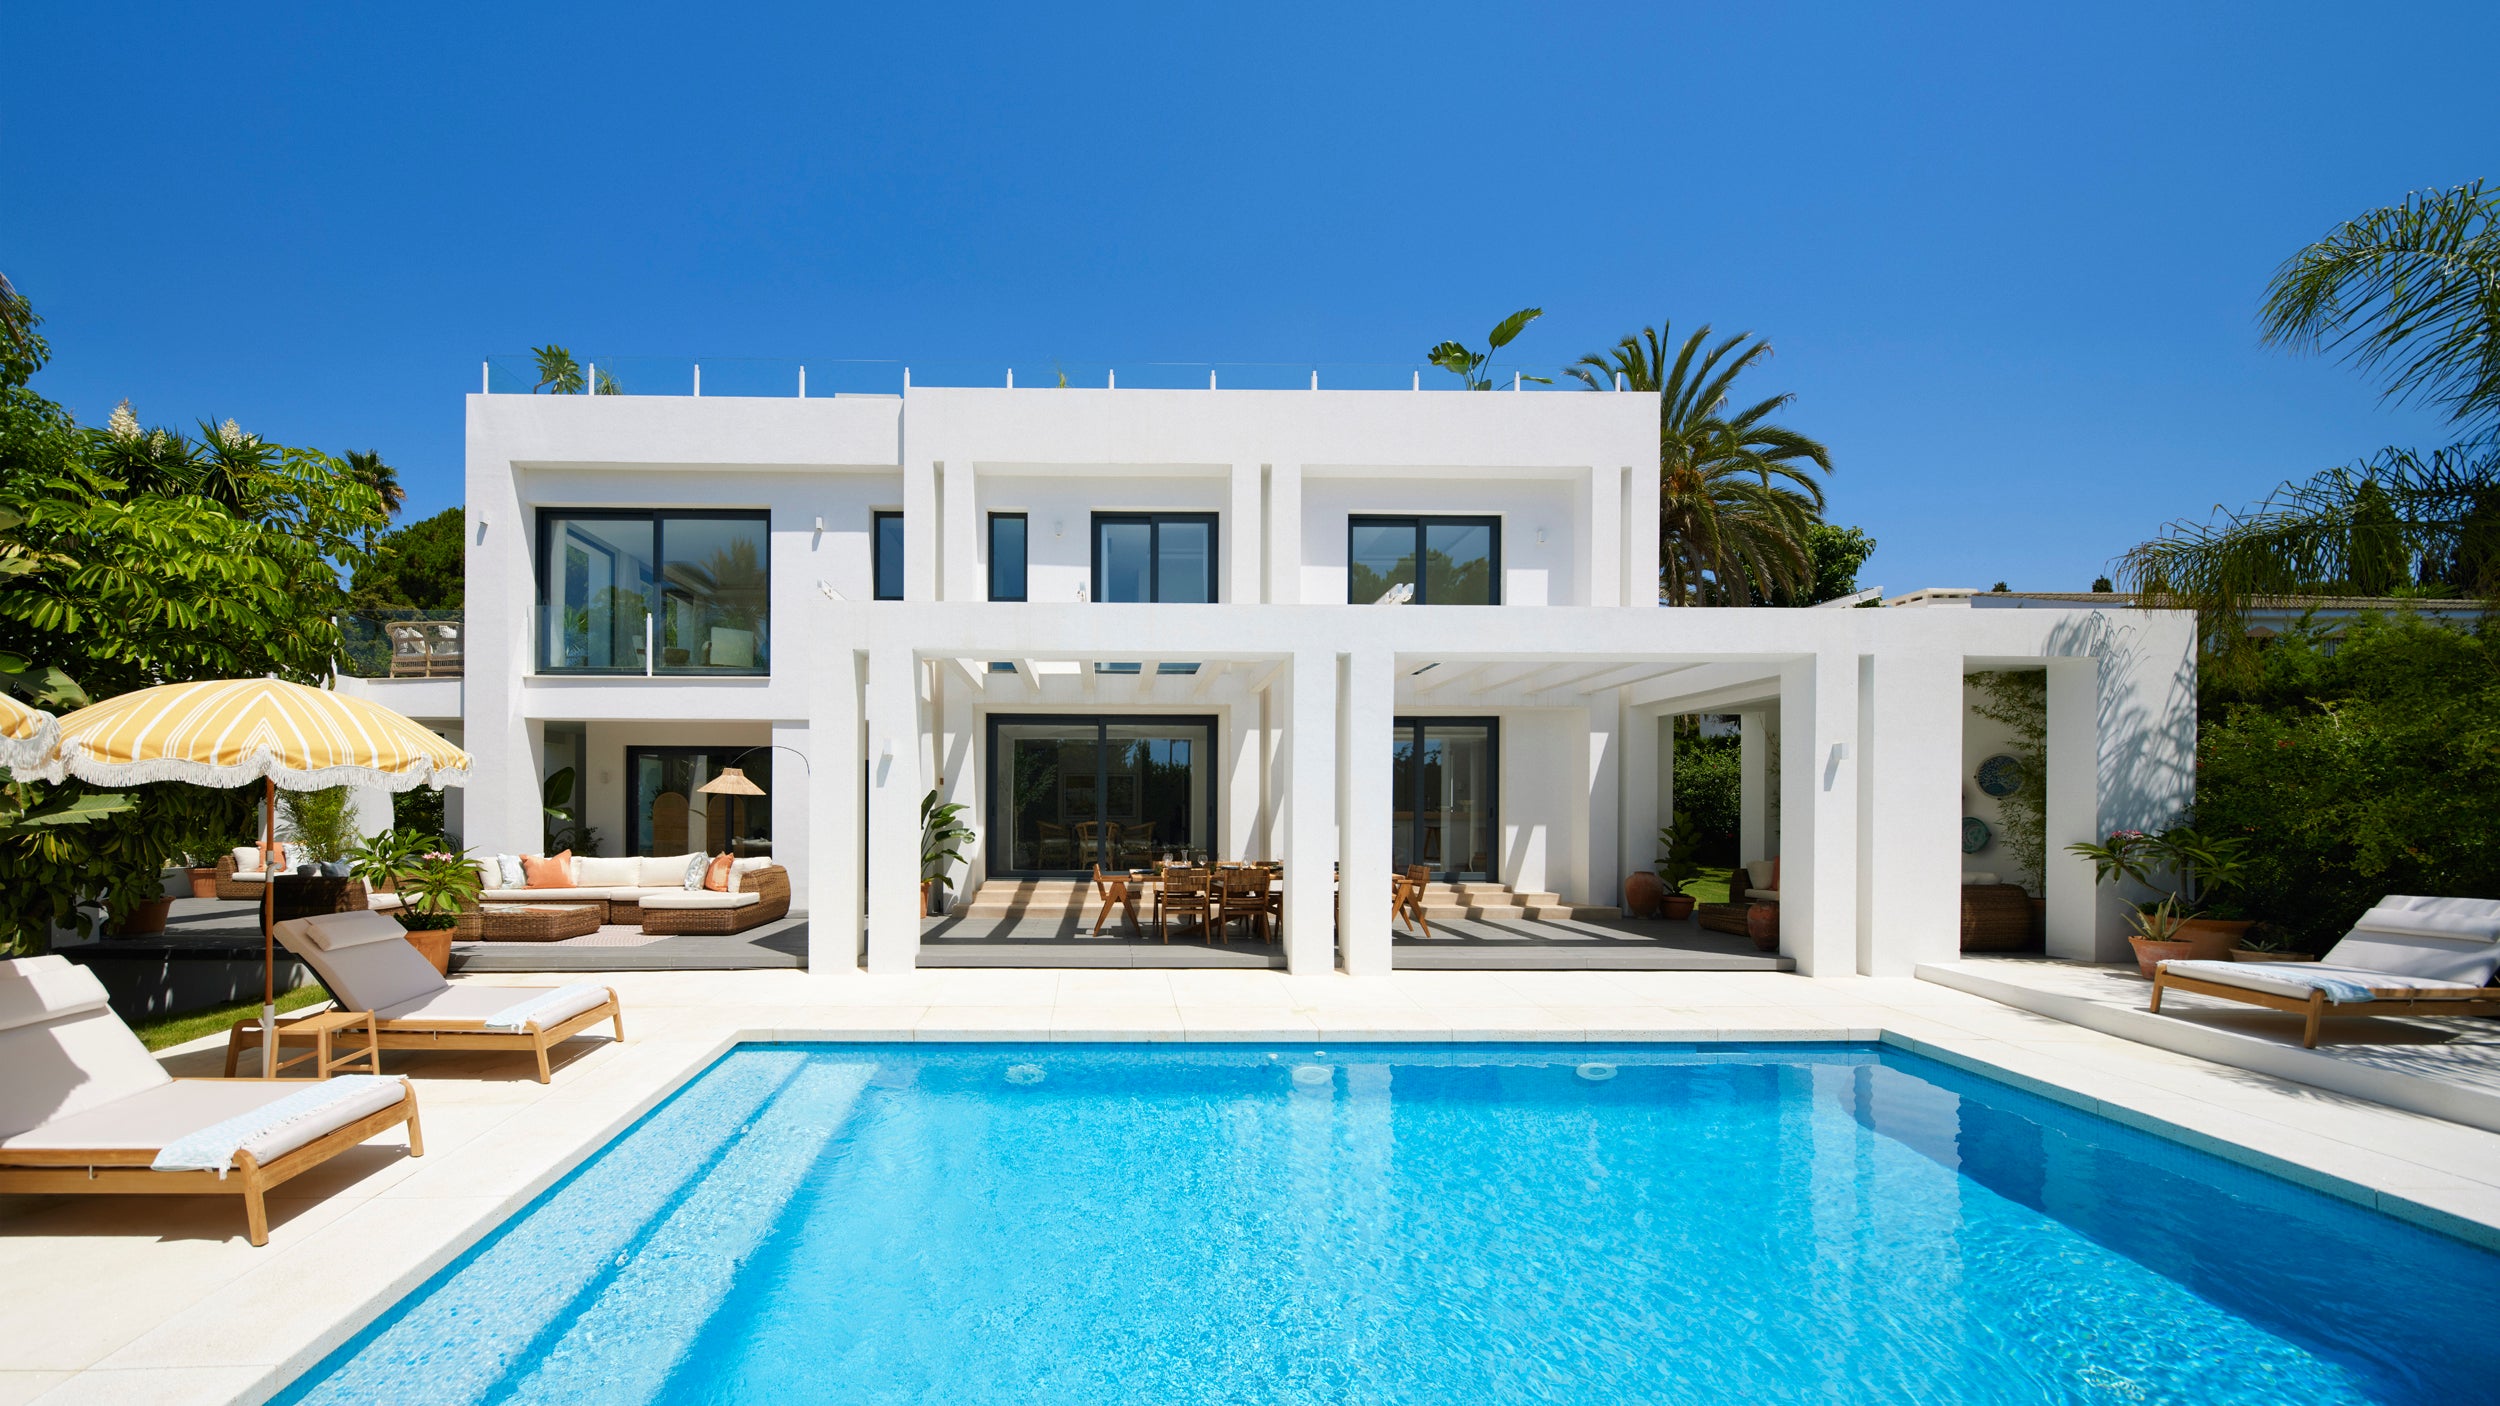 The Omaze Marbella Superdraw - Villa from the outside in the sun 